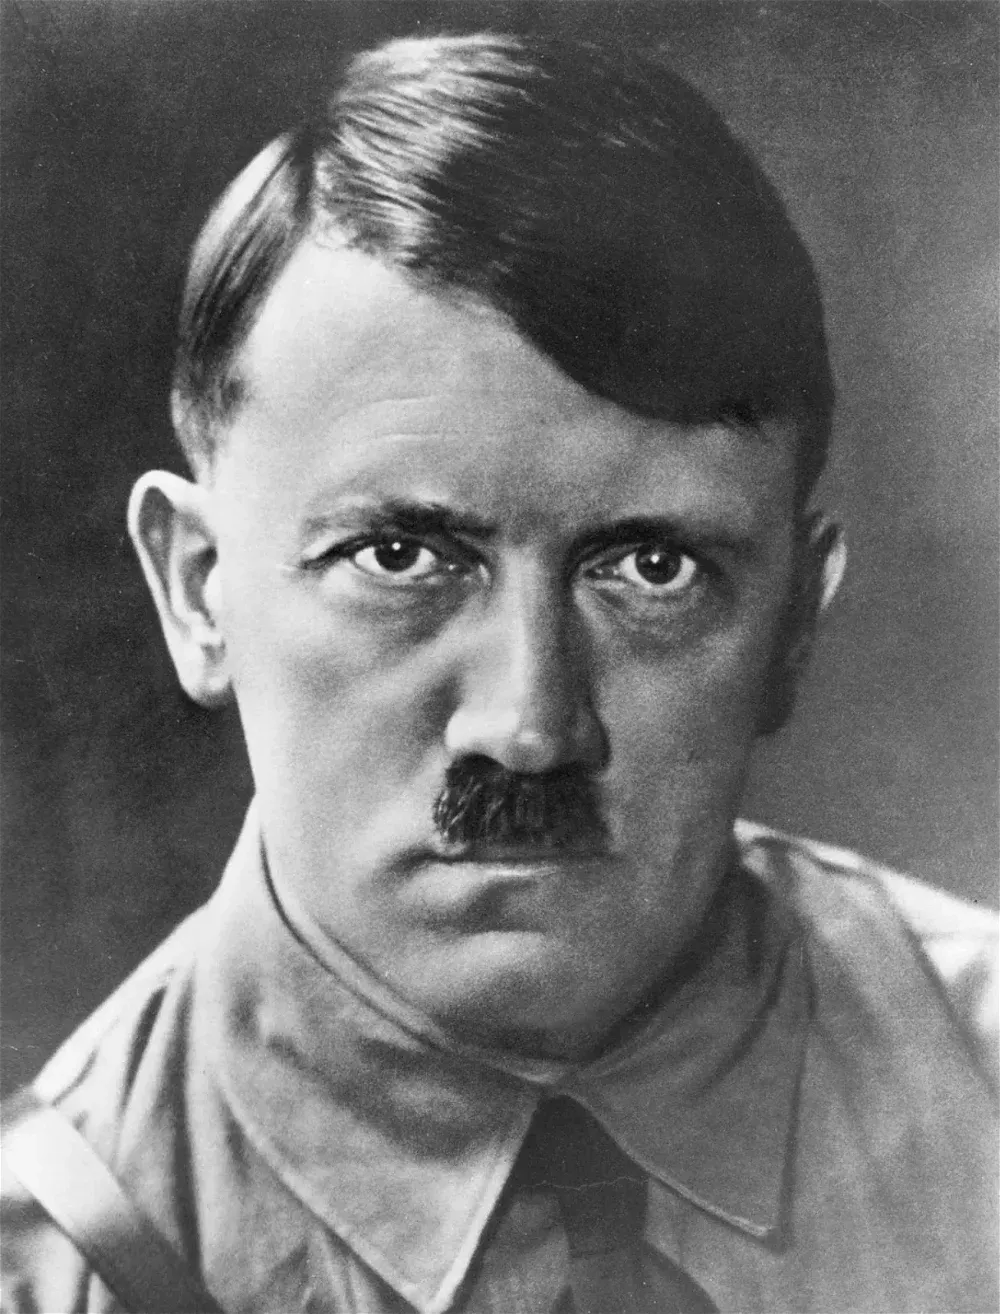 Avatar of Adolf Hitler